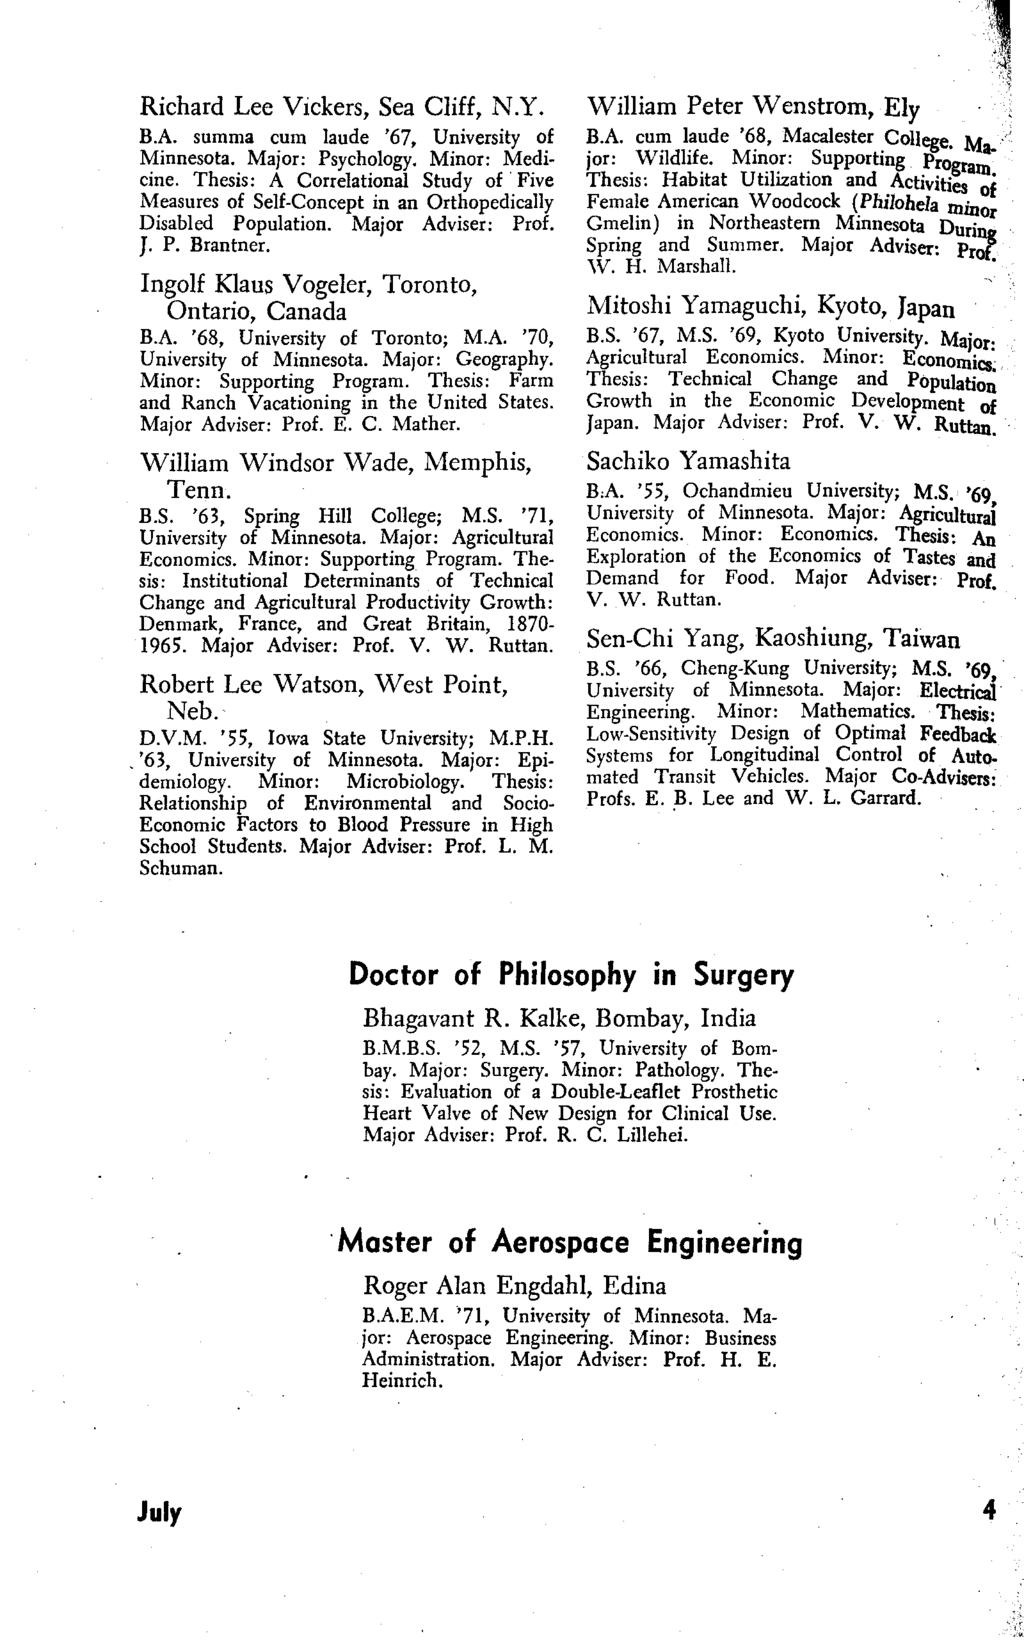 Richard Lee Vickers, Sea Cliff, N.Y. B.A. summa cum laude '67, University of Minnesota. Major: Psychology. Minor: Medicine.